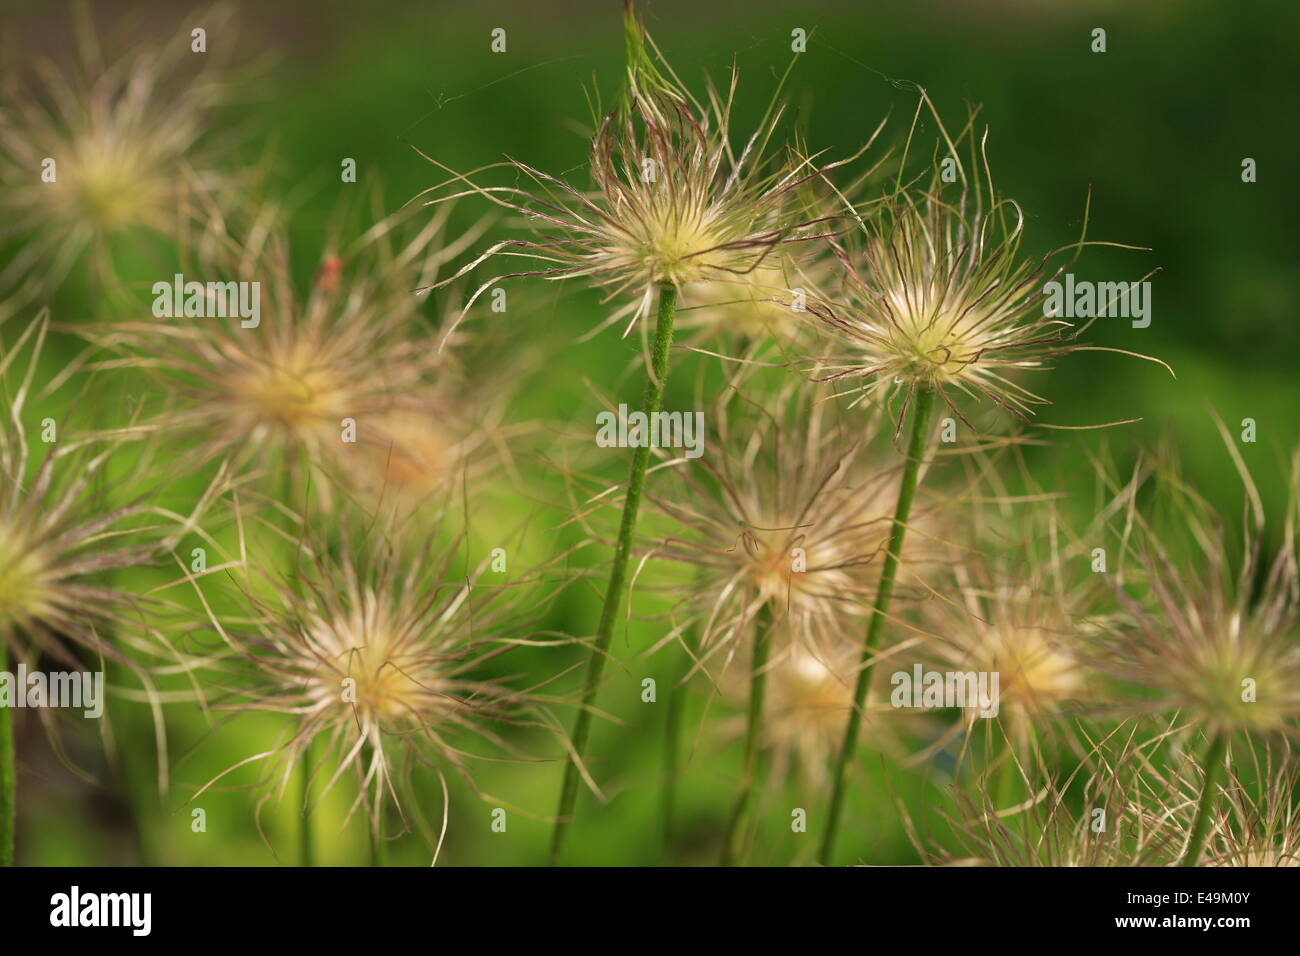 Common pasque flower - Pulsatilla vulgaris Stock Photo